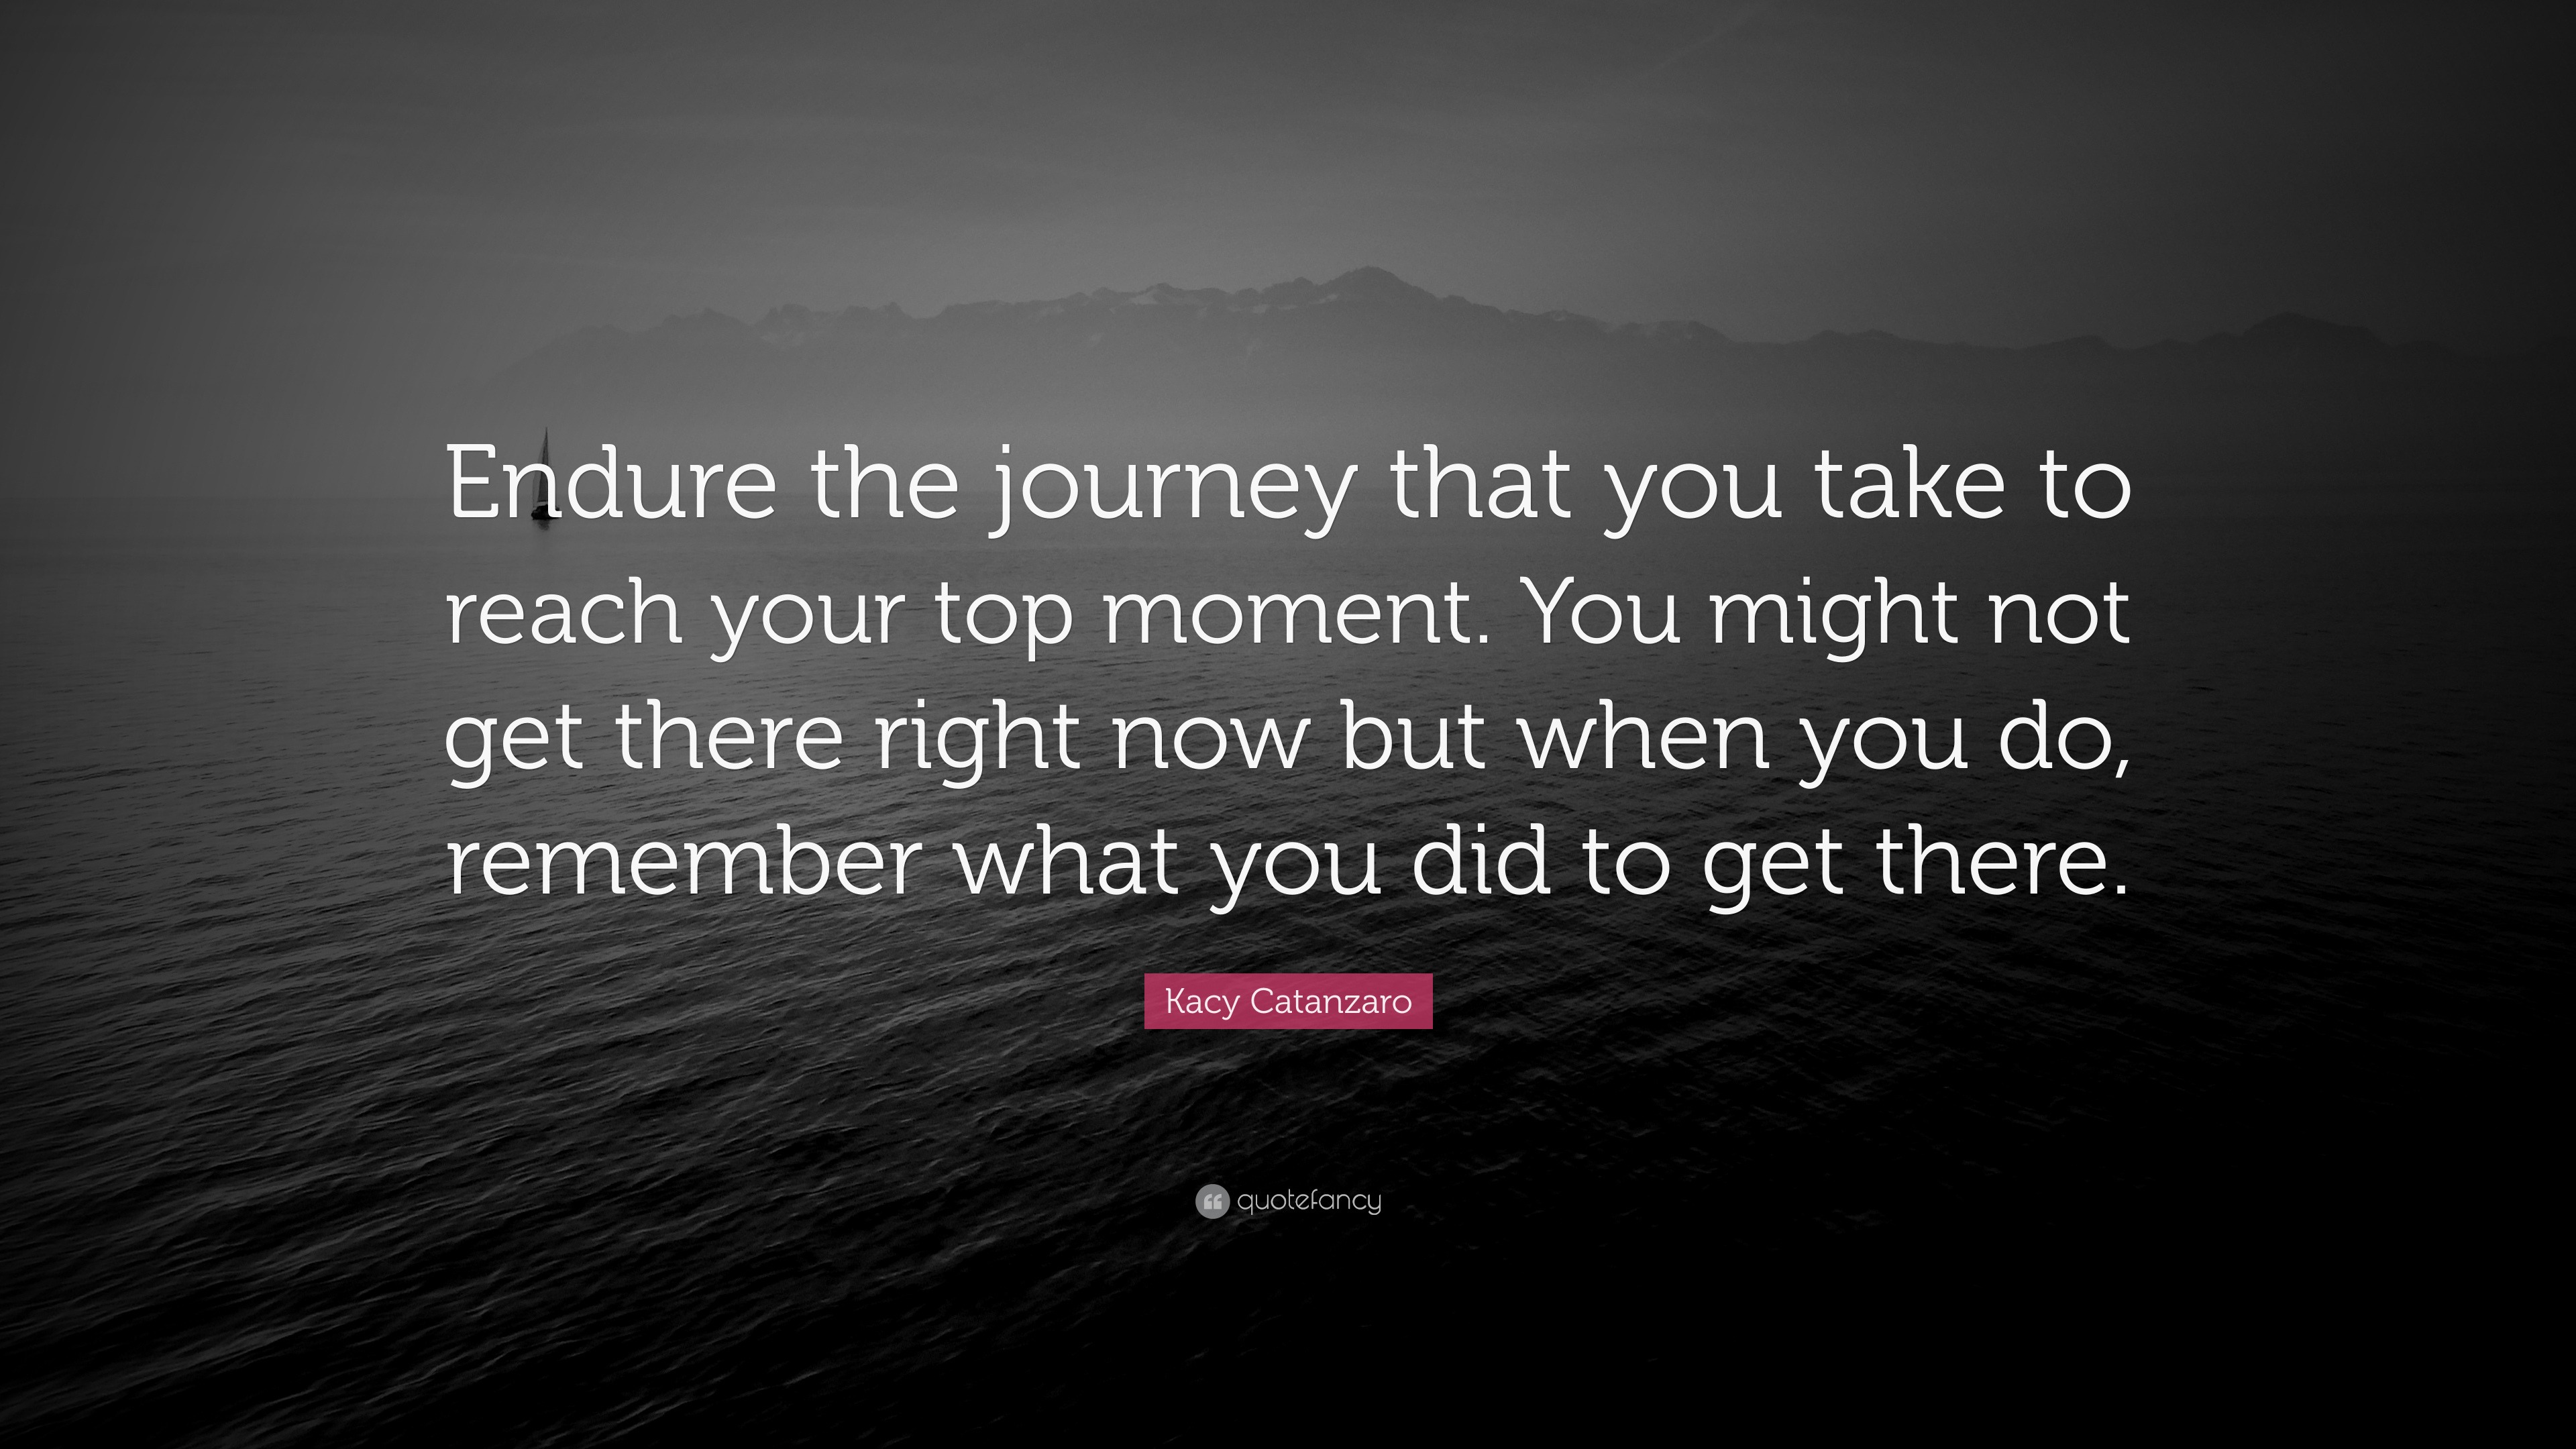 Kacy Catanzaro Quote: “Endure the journey that you take to reach your ...